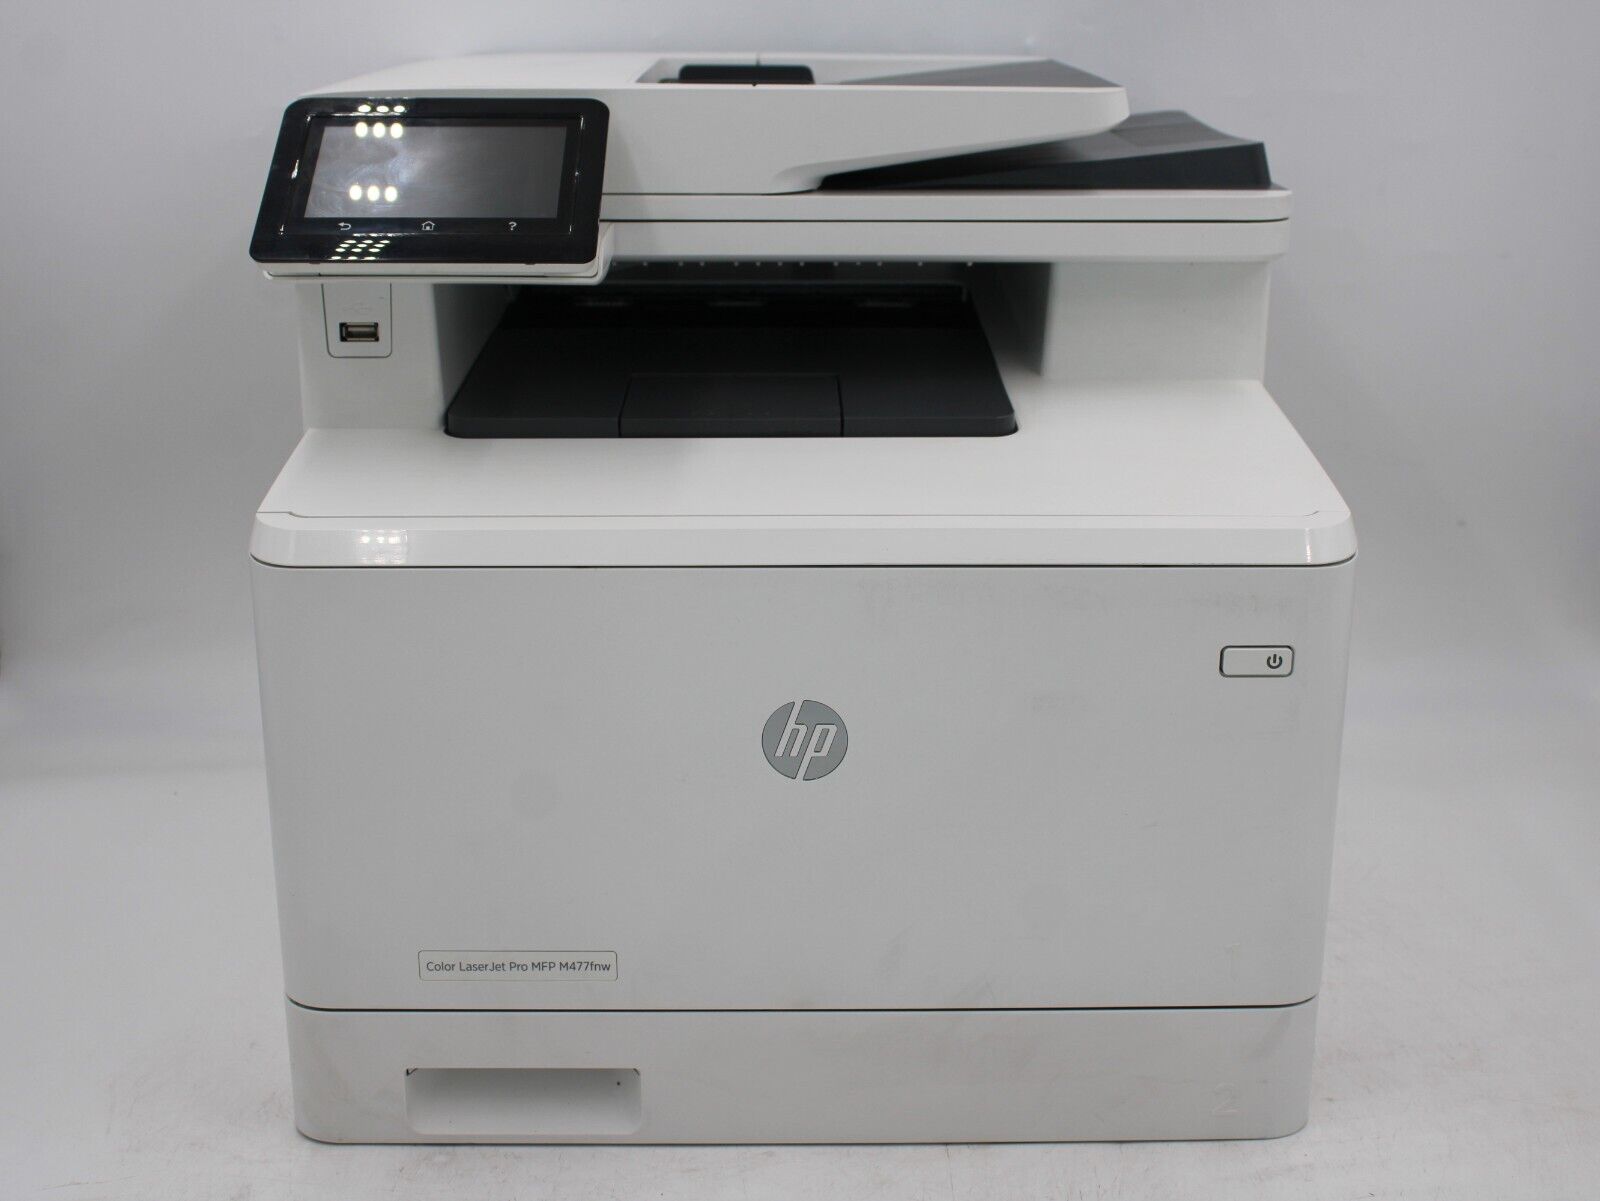 HP Laserjet Pro MFP M477fnw All-In-One Color Laser Printer Copier Fax CF377A